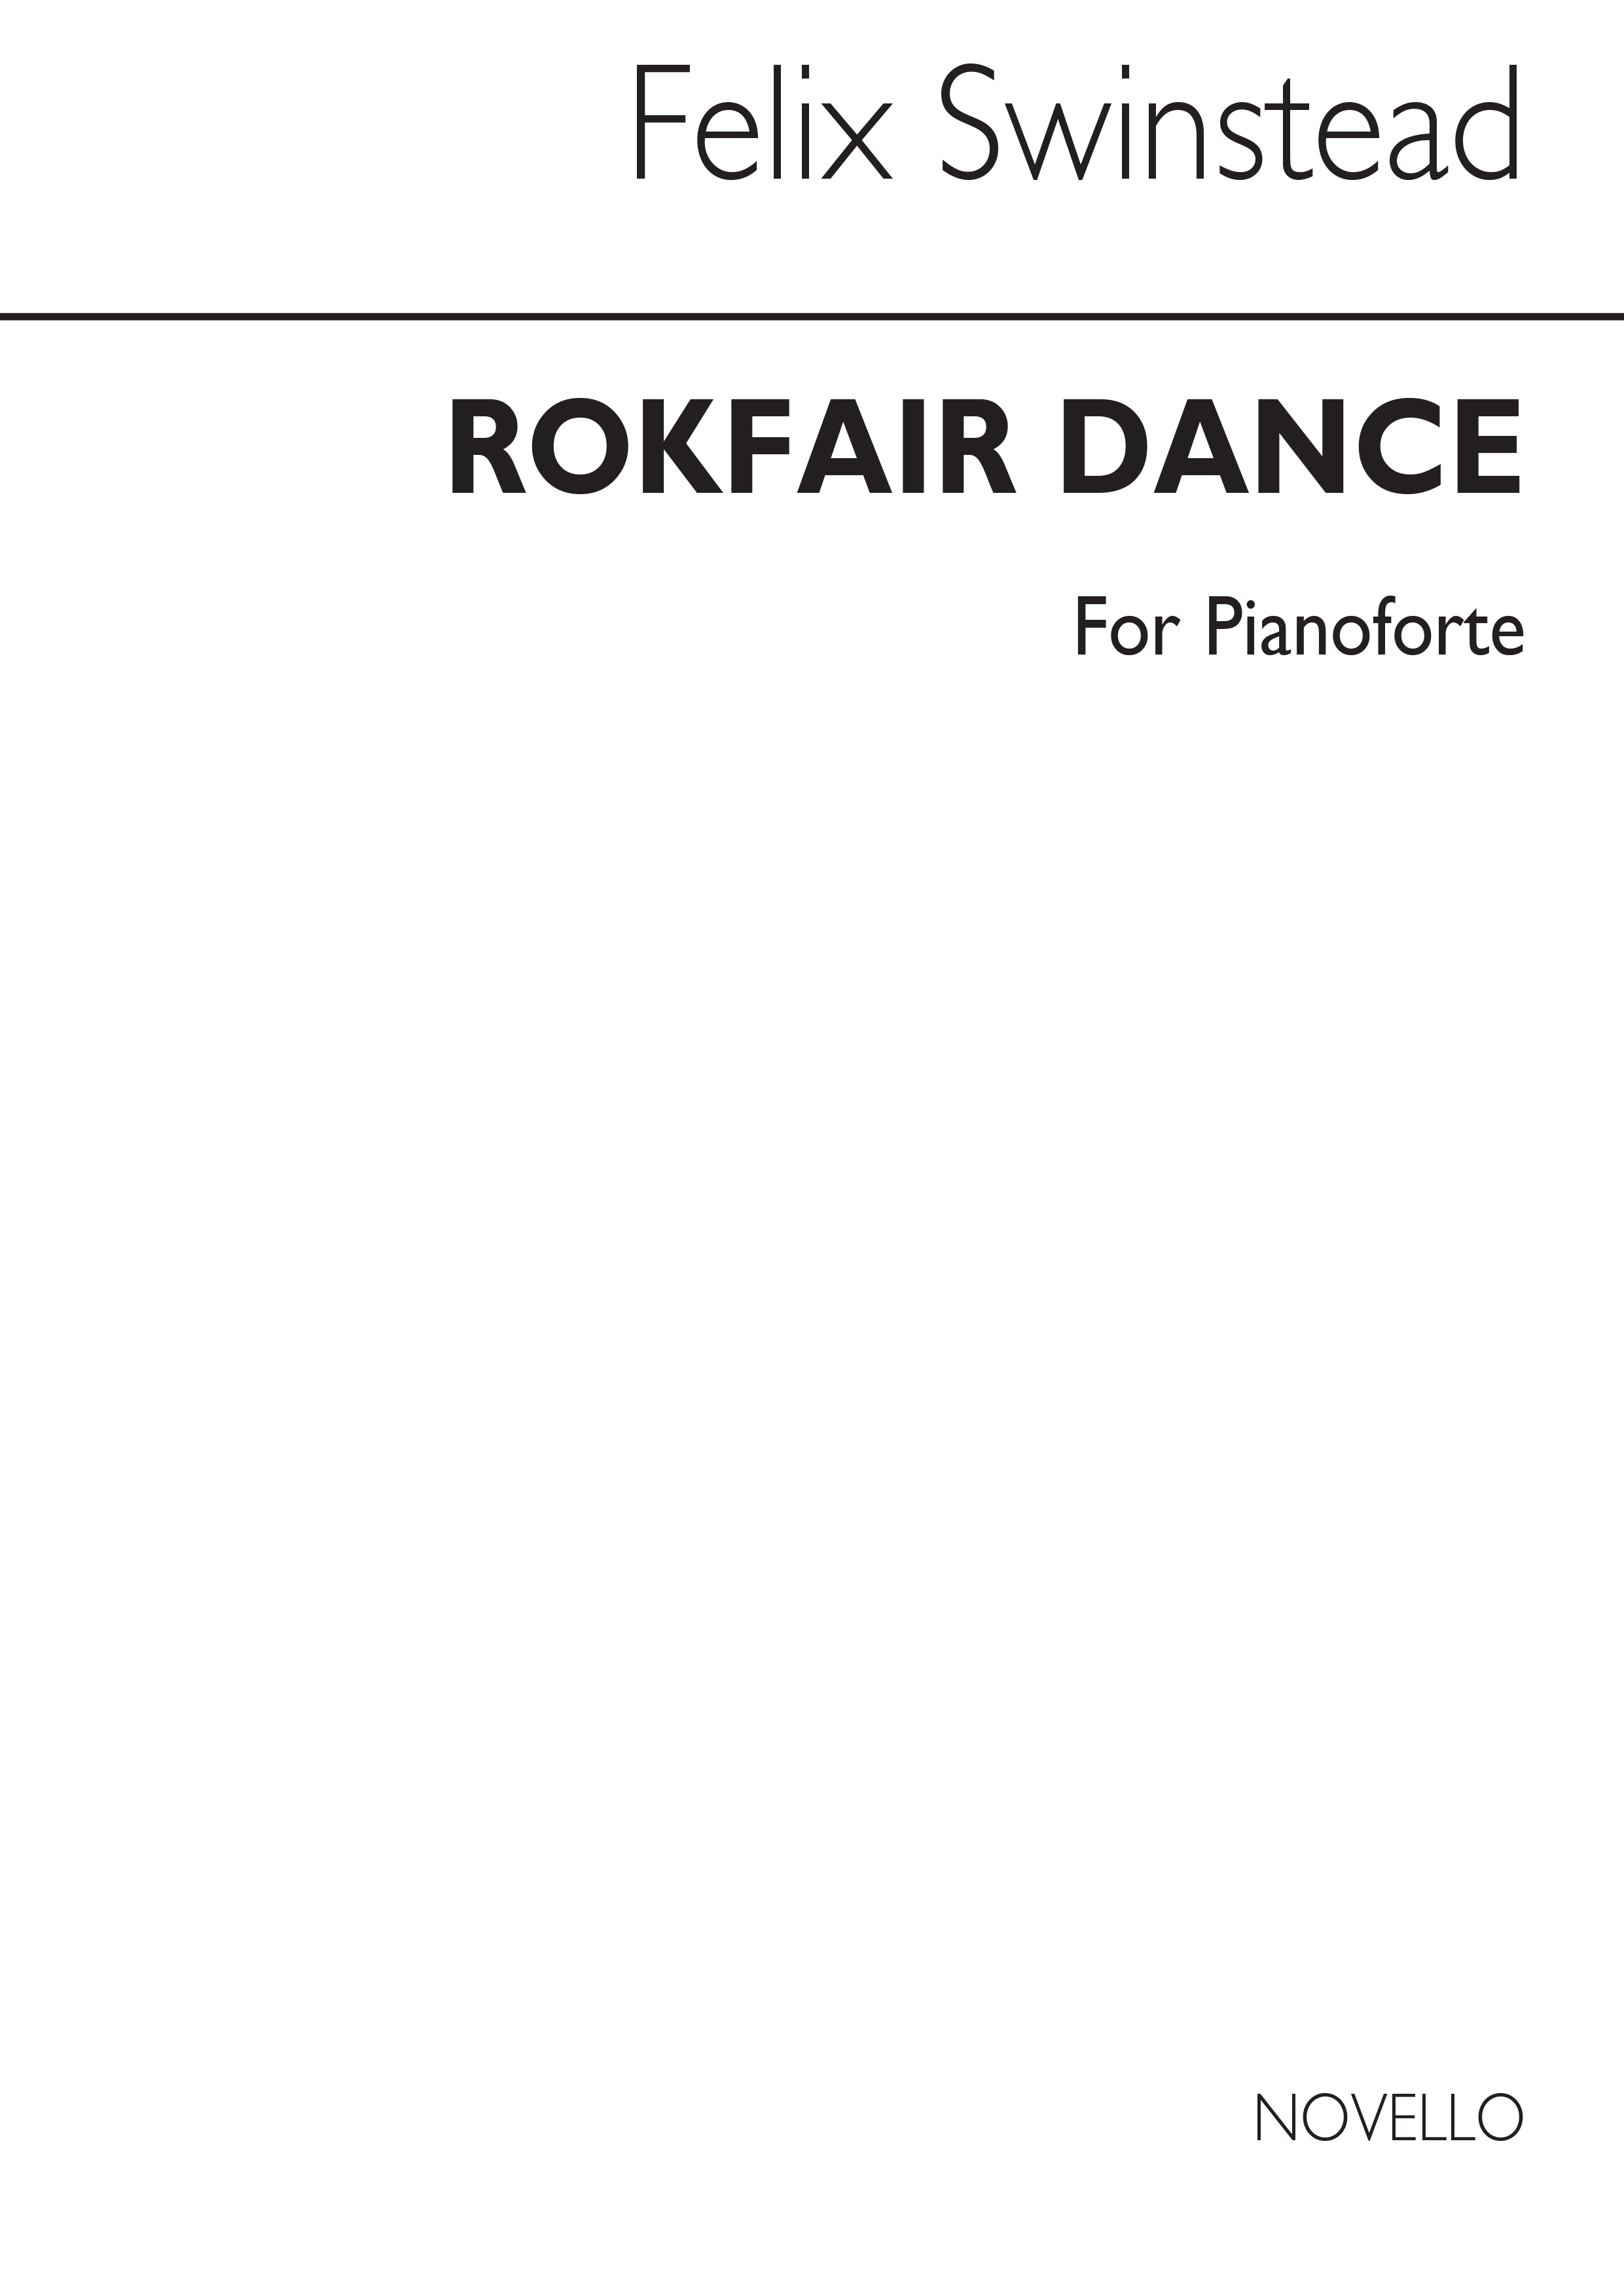 Swinstead: Rokfair Dance for Piano